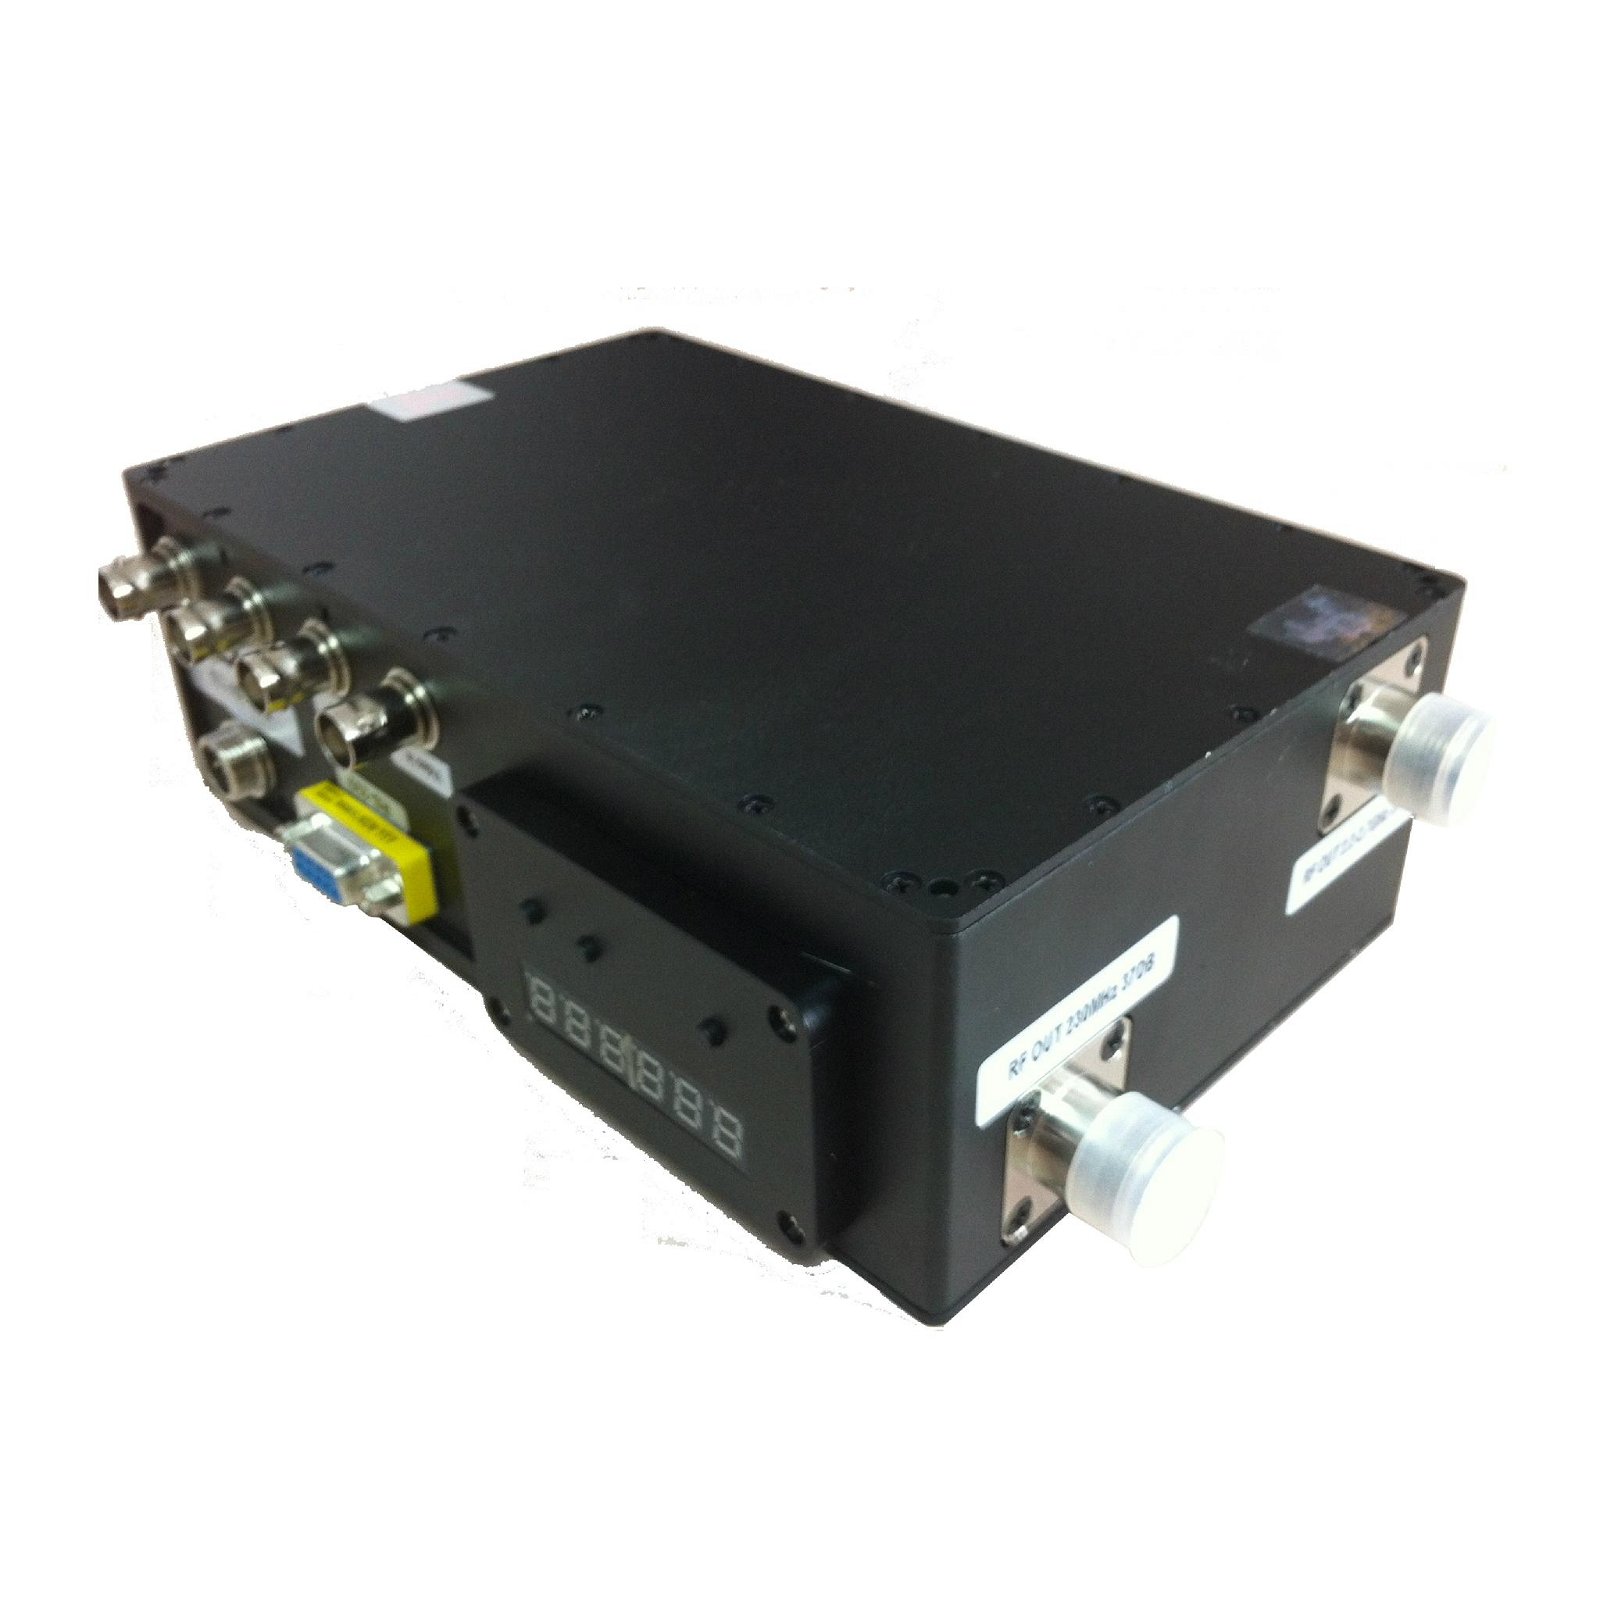 Two-way Speaking Military COFDM wireless AV+data Signal Transmitter SG-C10 2